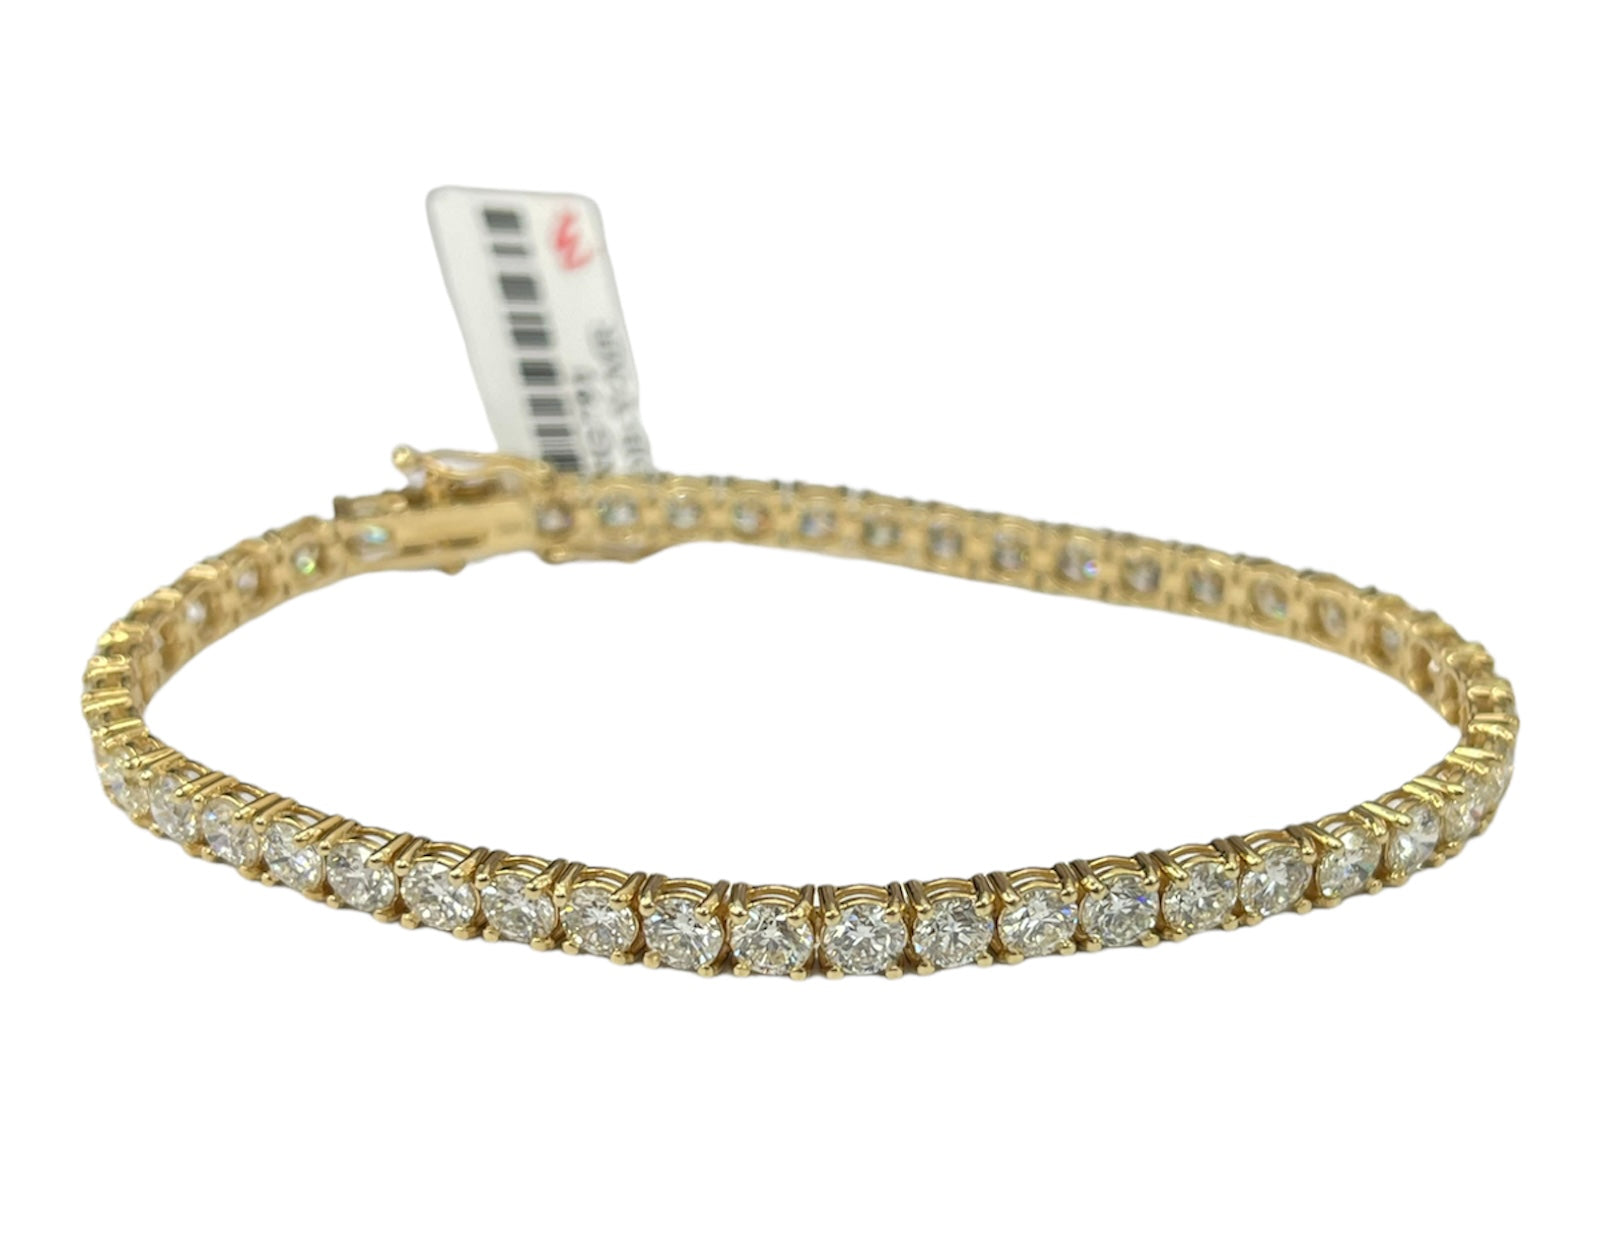 8.63 Carats Diamond Tennis Bracelet Round Brilliant 14K Yellow Gold